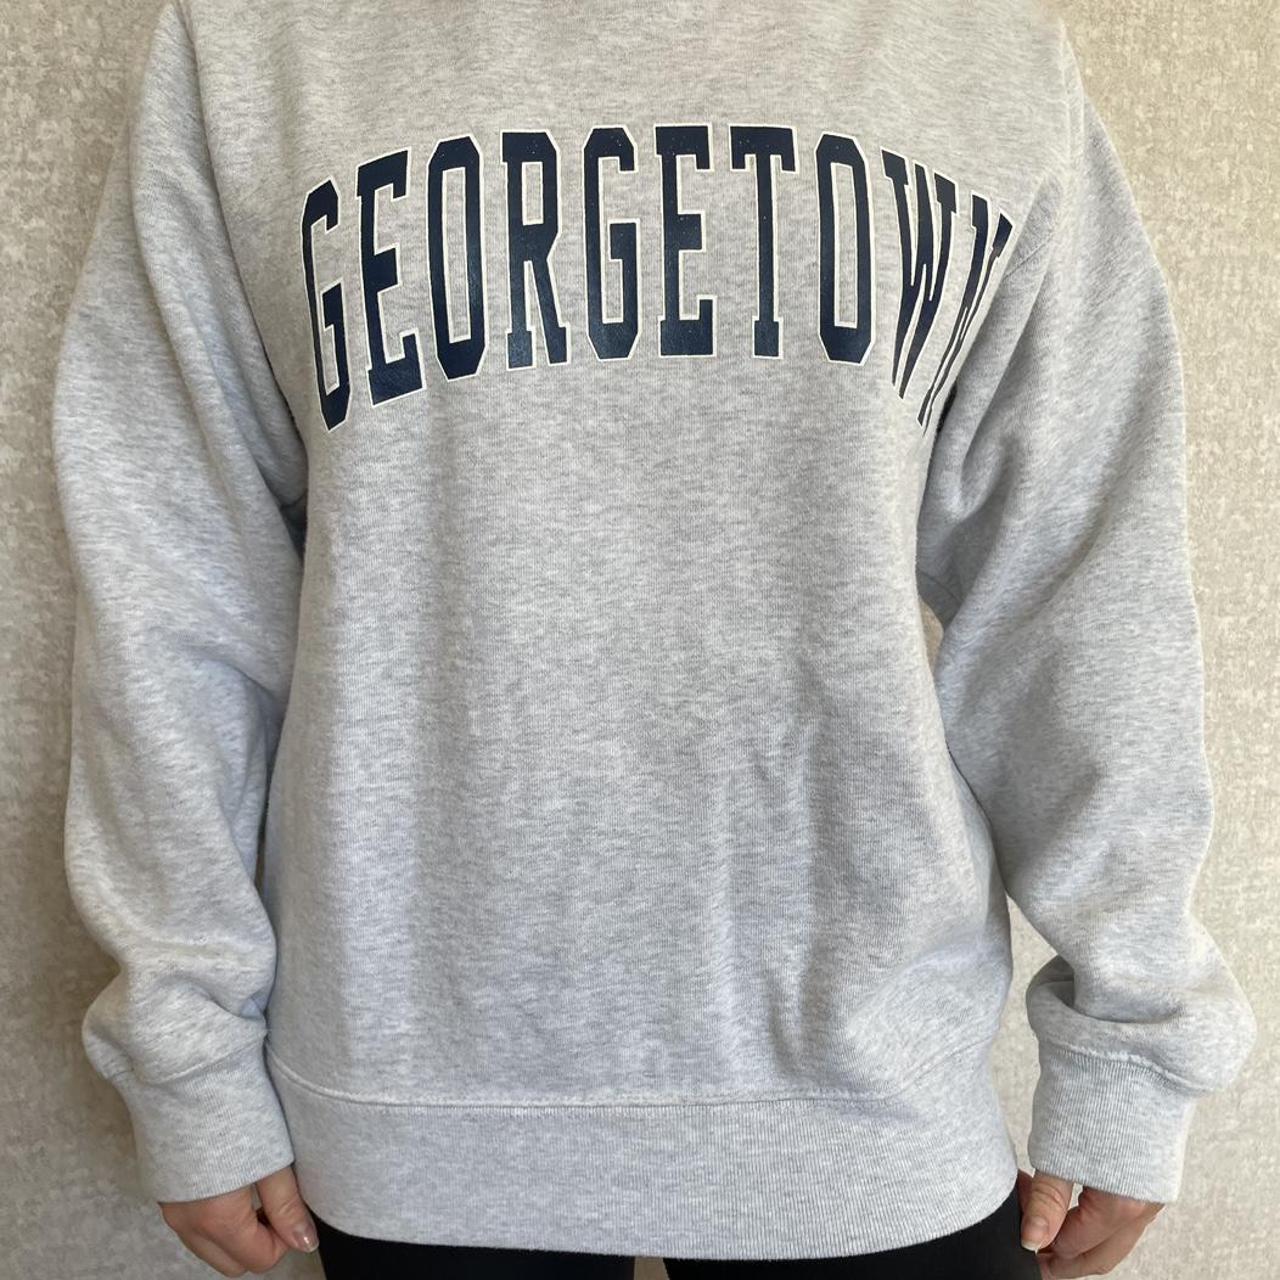 Brandy Melville limited edition Georgetown soft... - Depop